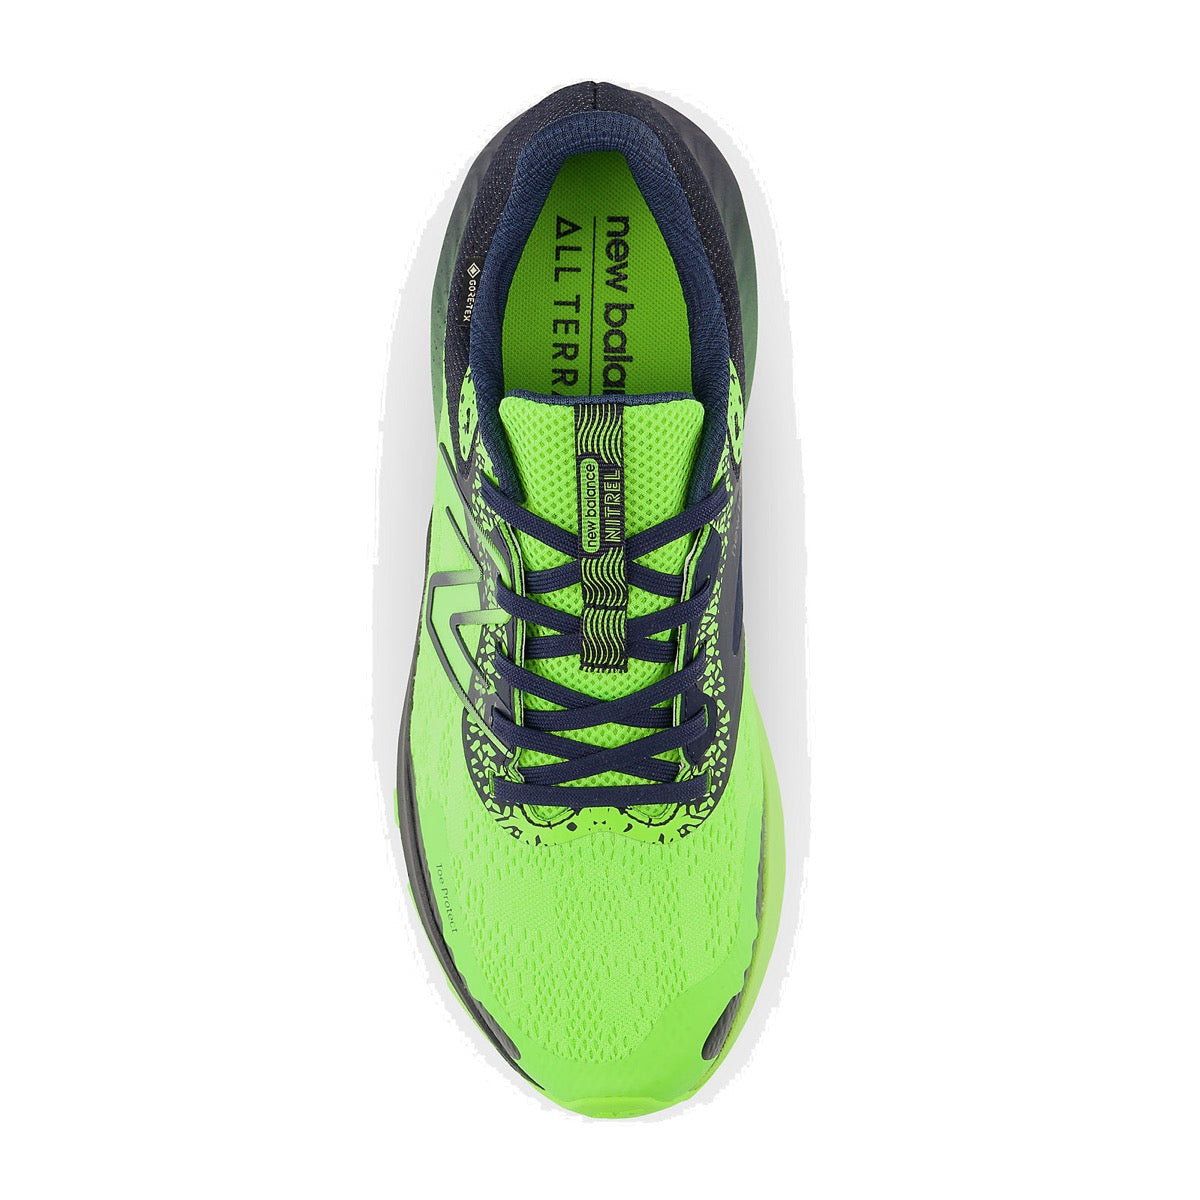 Scarpe Uomo NEW BALANCE Sneakers Trail DynaSoft Nitrel V5 GTX colore Pixel Green e Eclipse